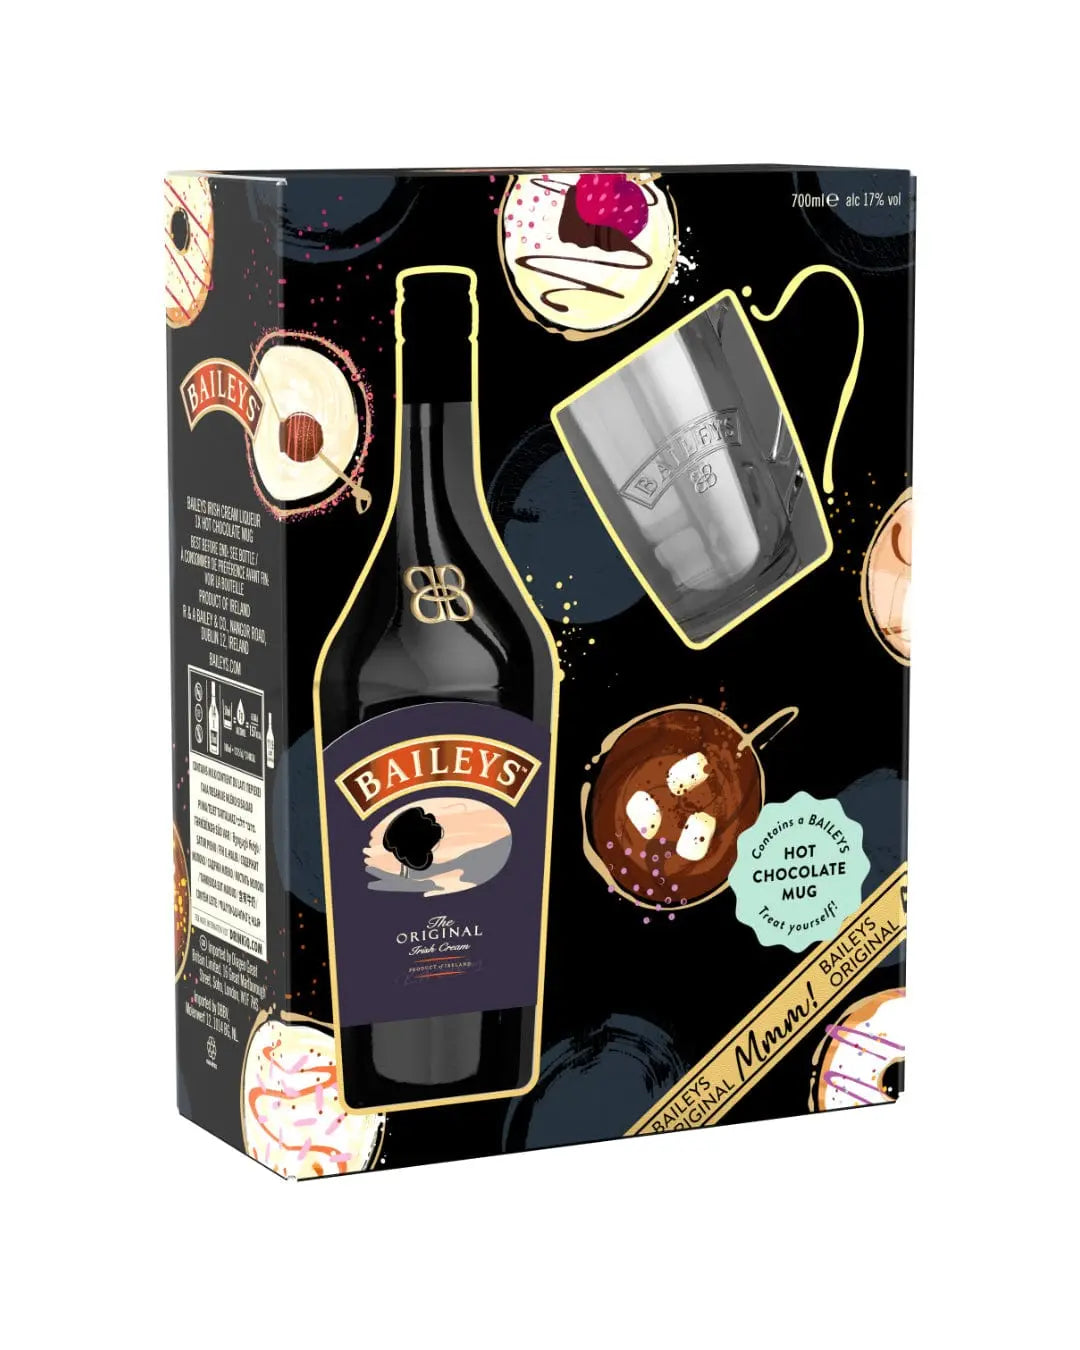 70 Gift Irish – Bottle Baileys Cream cl The Club Pack, Original Liqueur